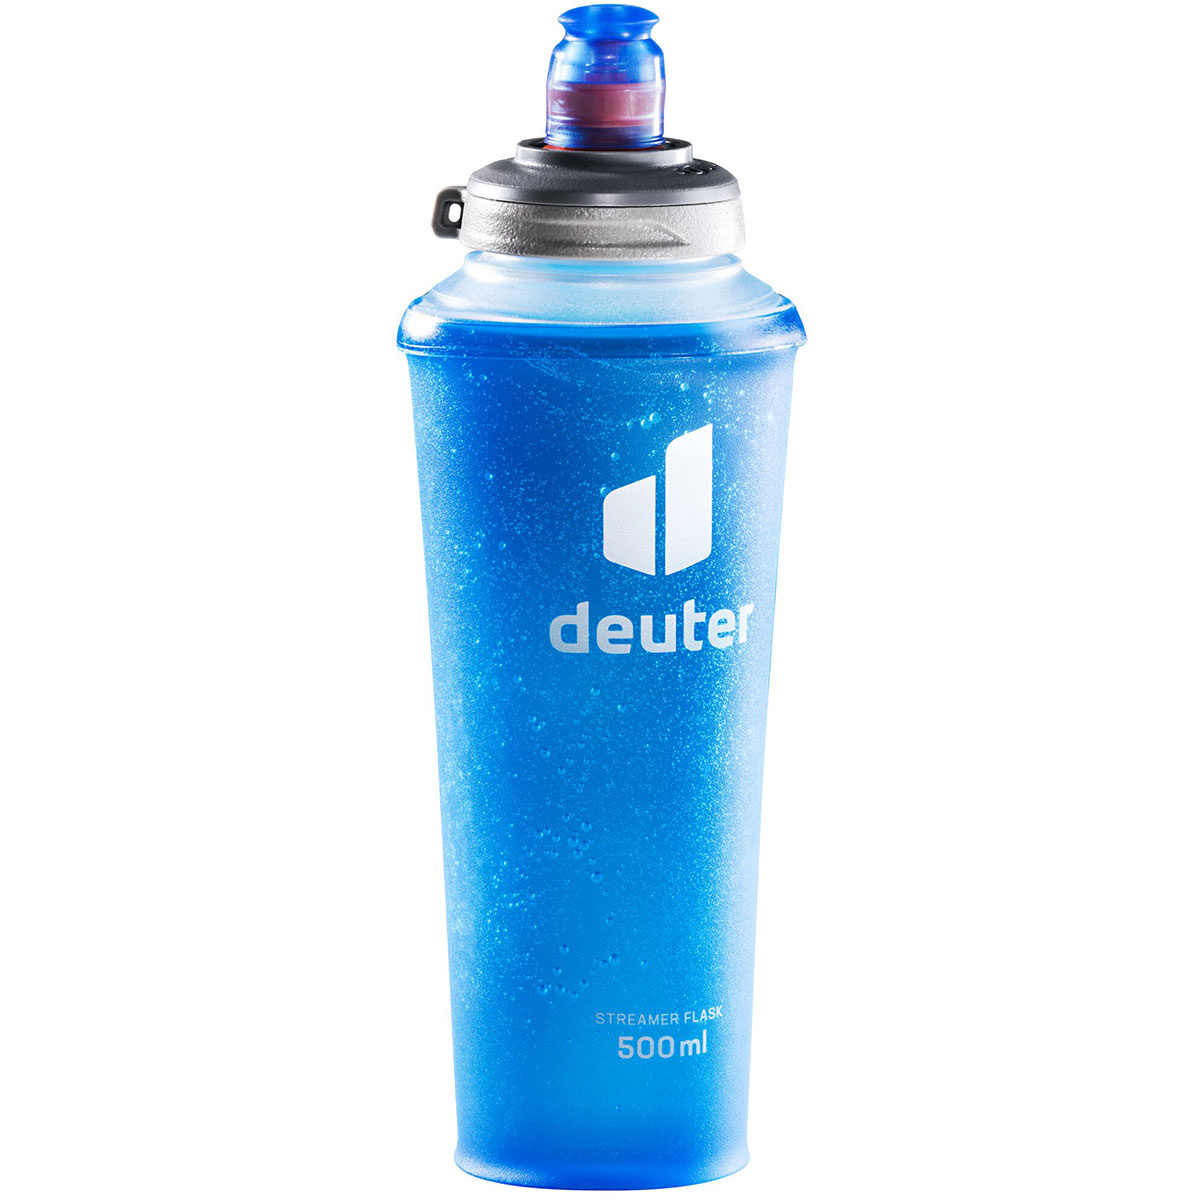 Image of Deuter Borraccia Streamer Flask